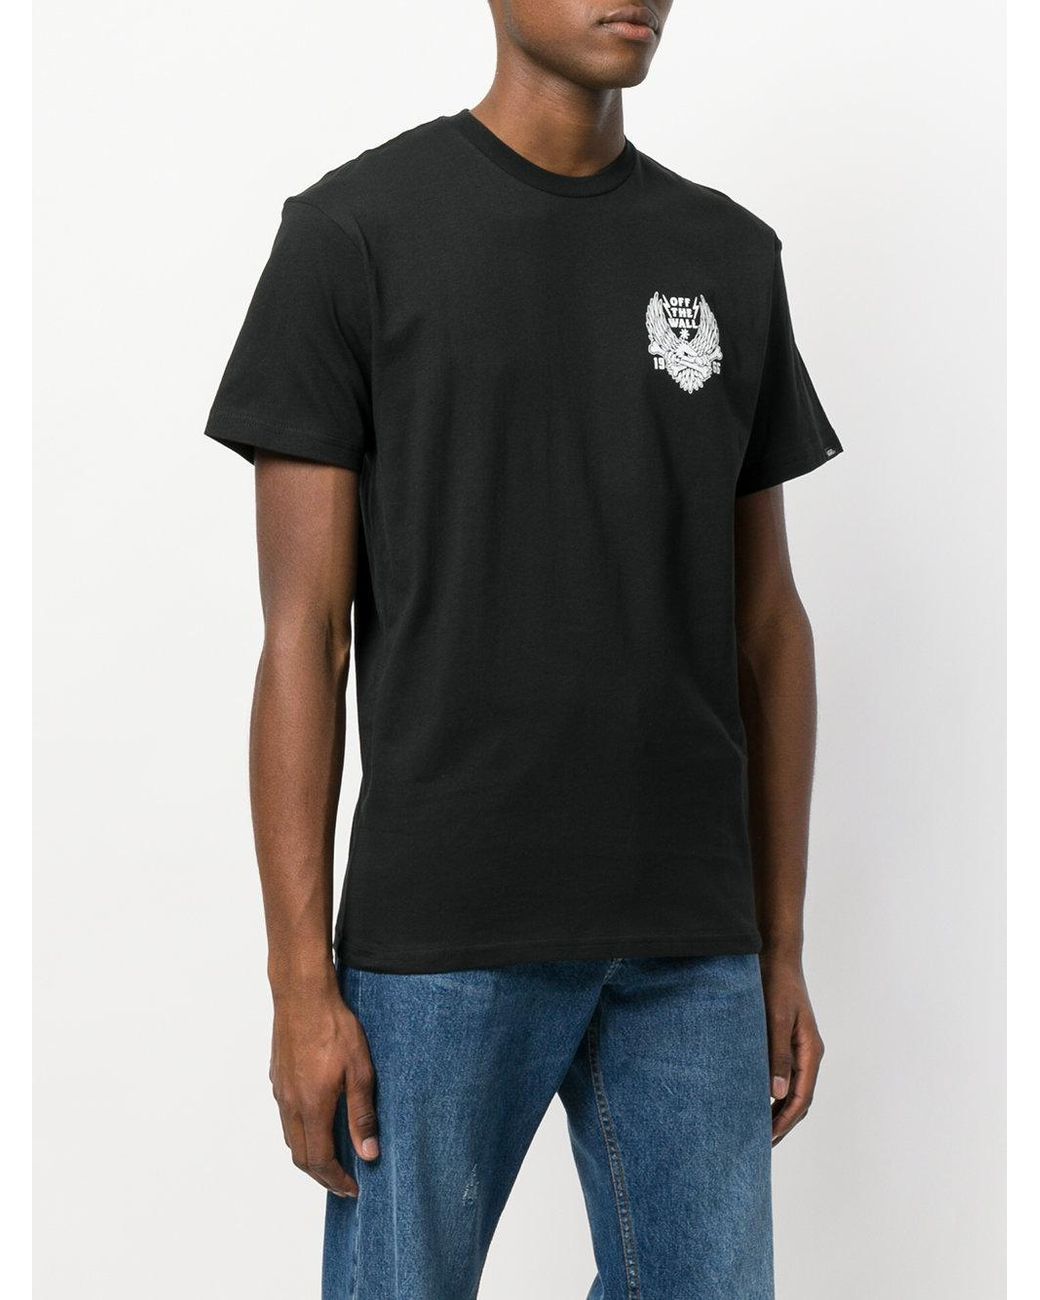 Vans Cotton Eagle Bones Logo T-shirt in Black for Men | Lyst